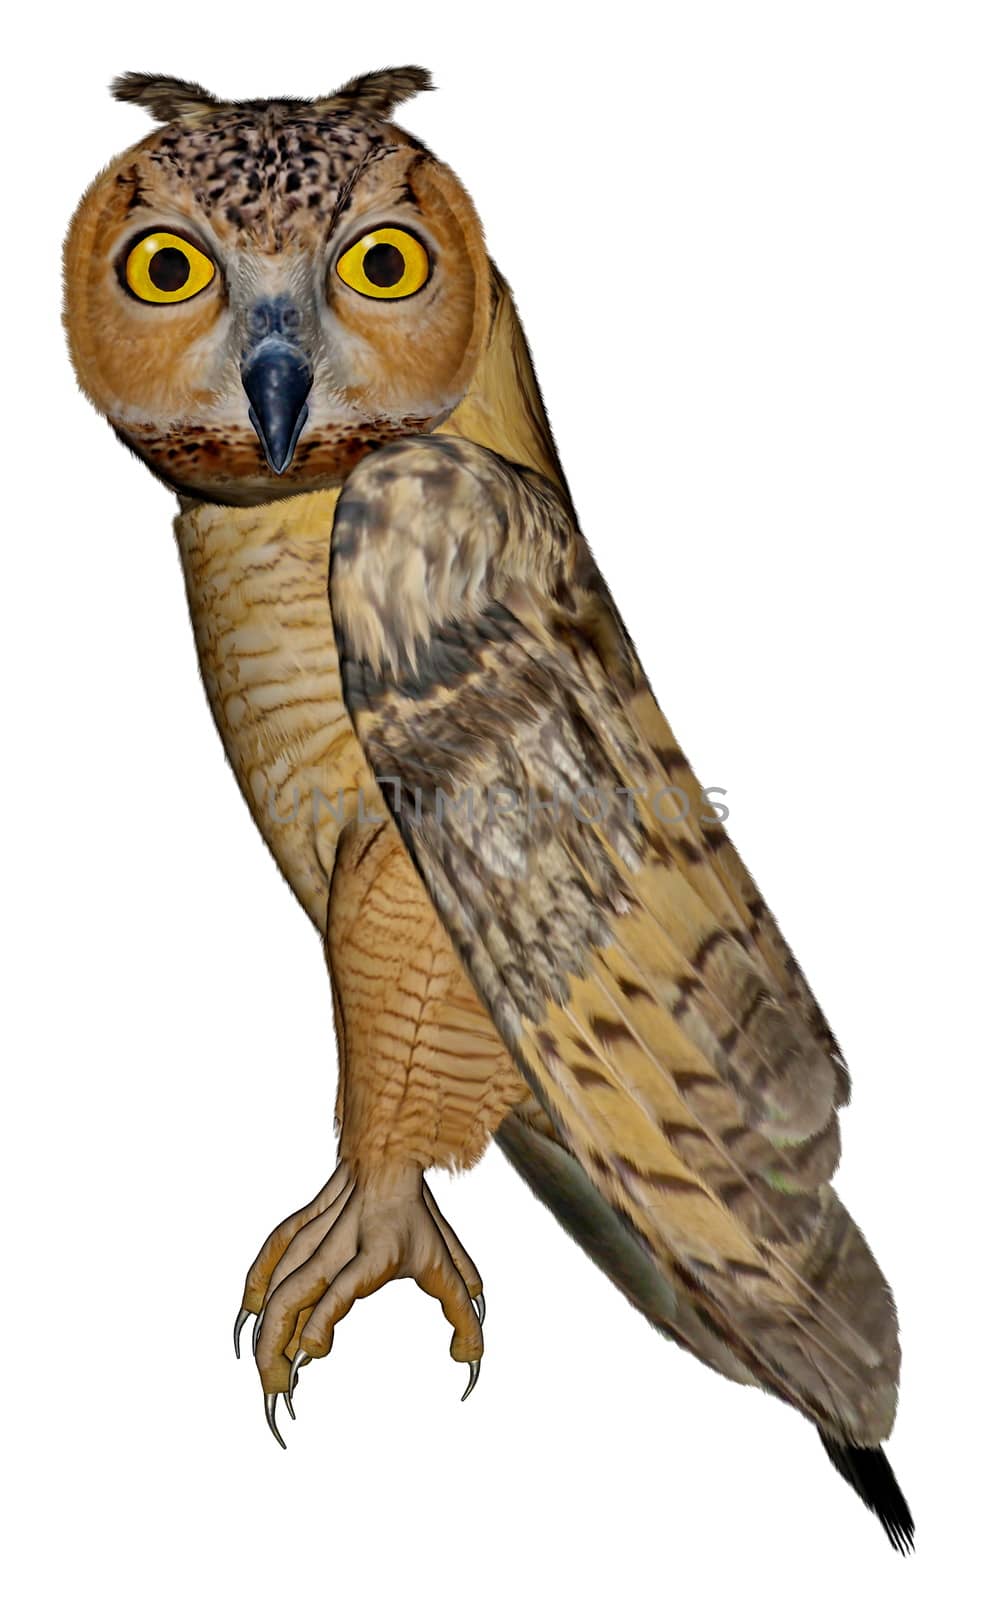 Eagle owl - 3D render by Elenaphotos21